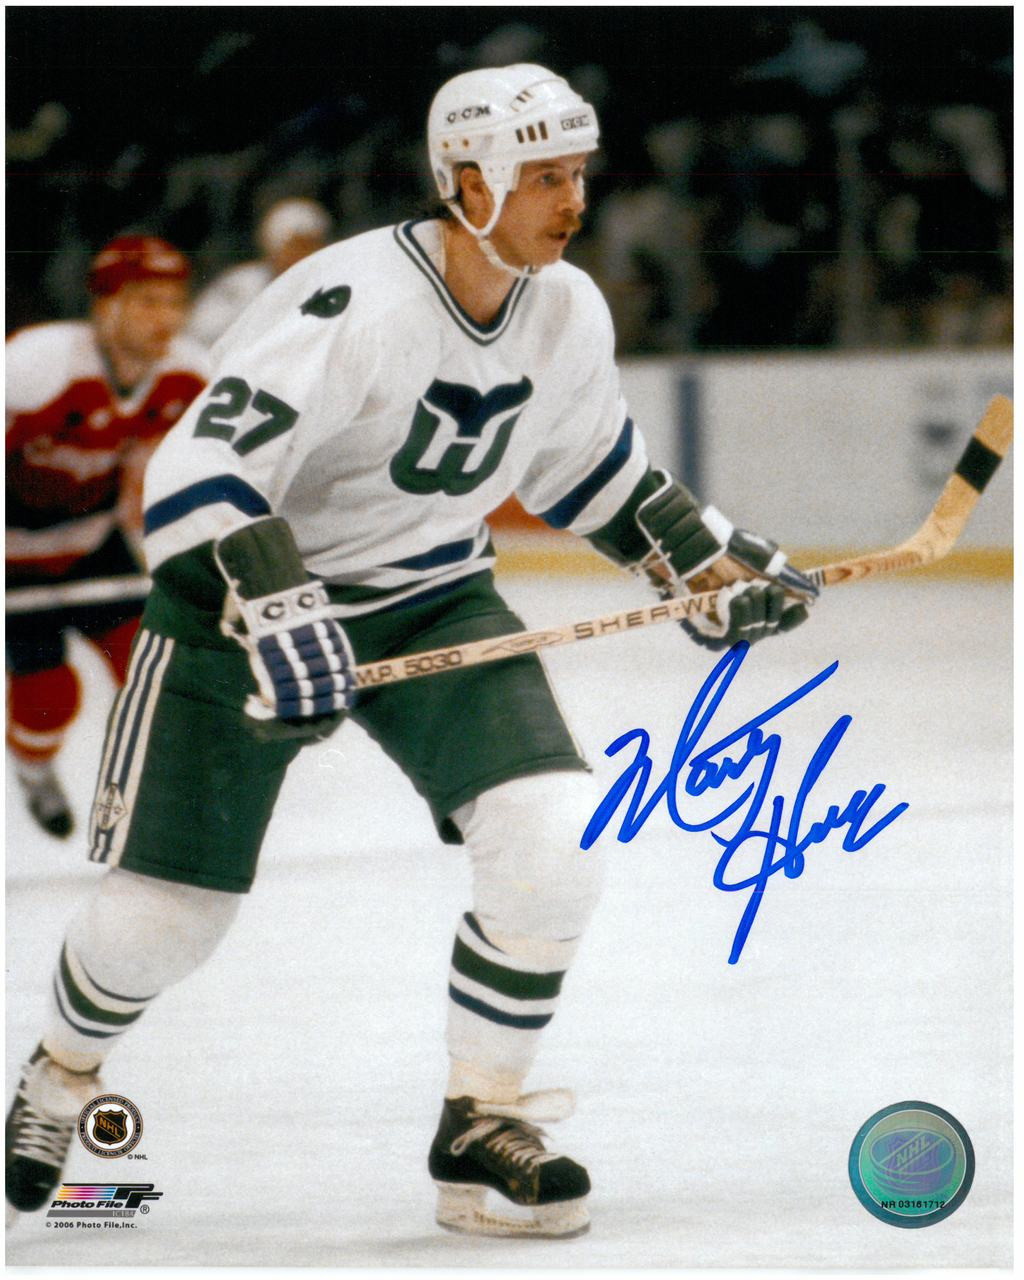 Gordie Howe Autographed Legends of Hockey Card - Detroit City Sports